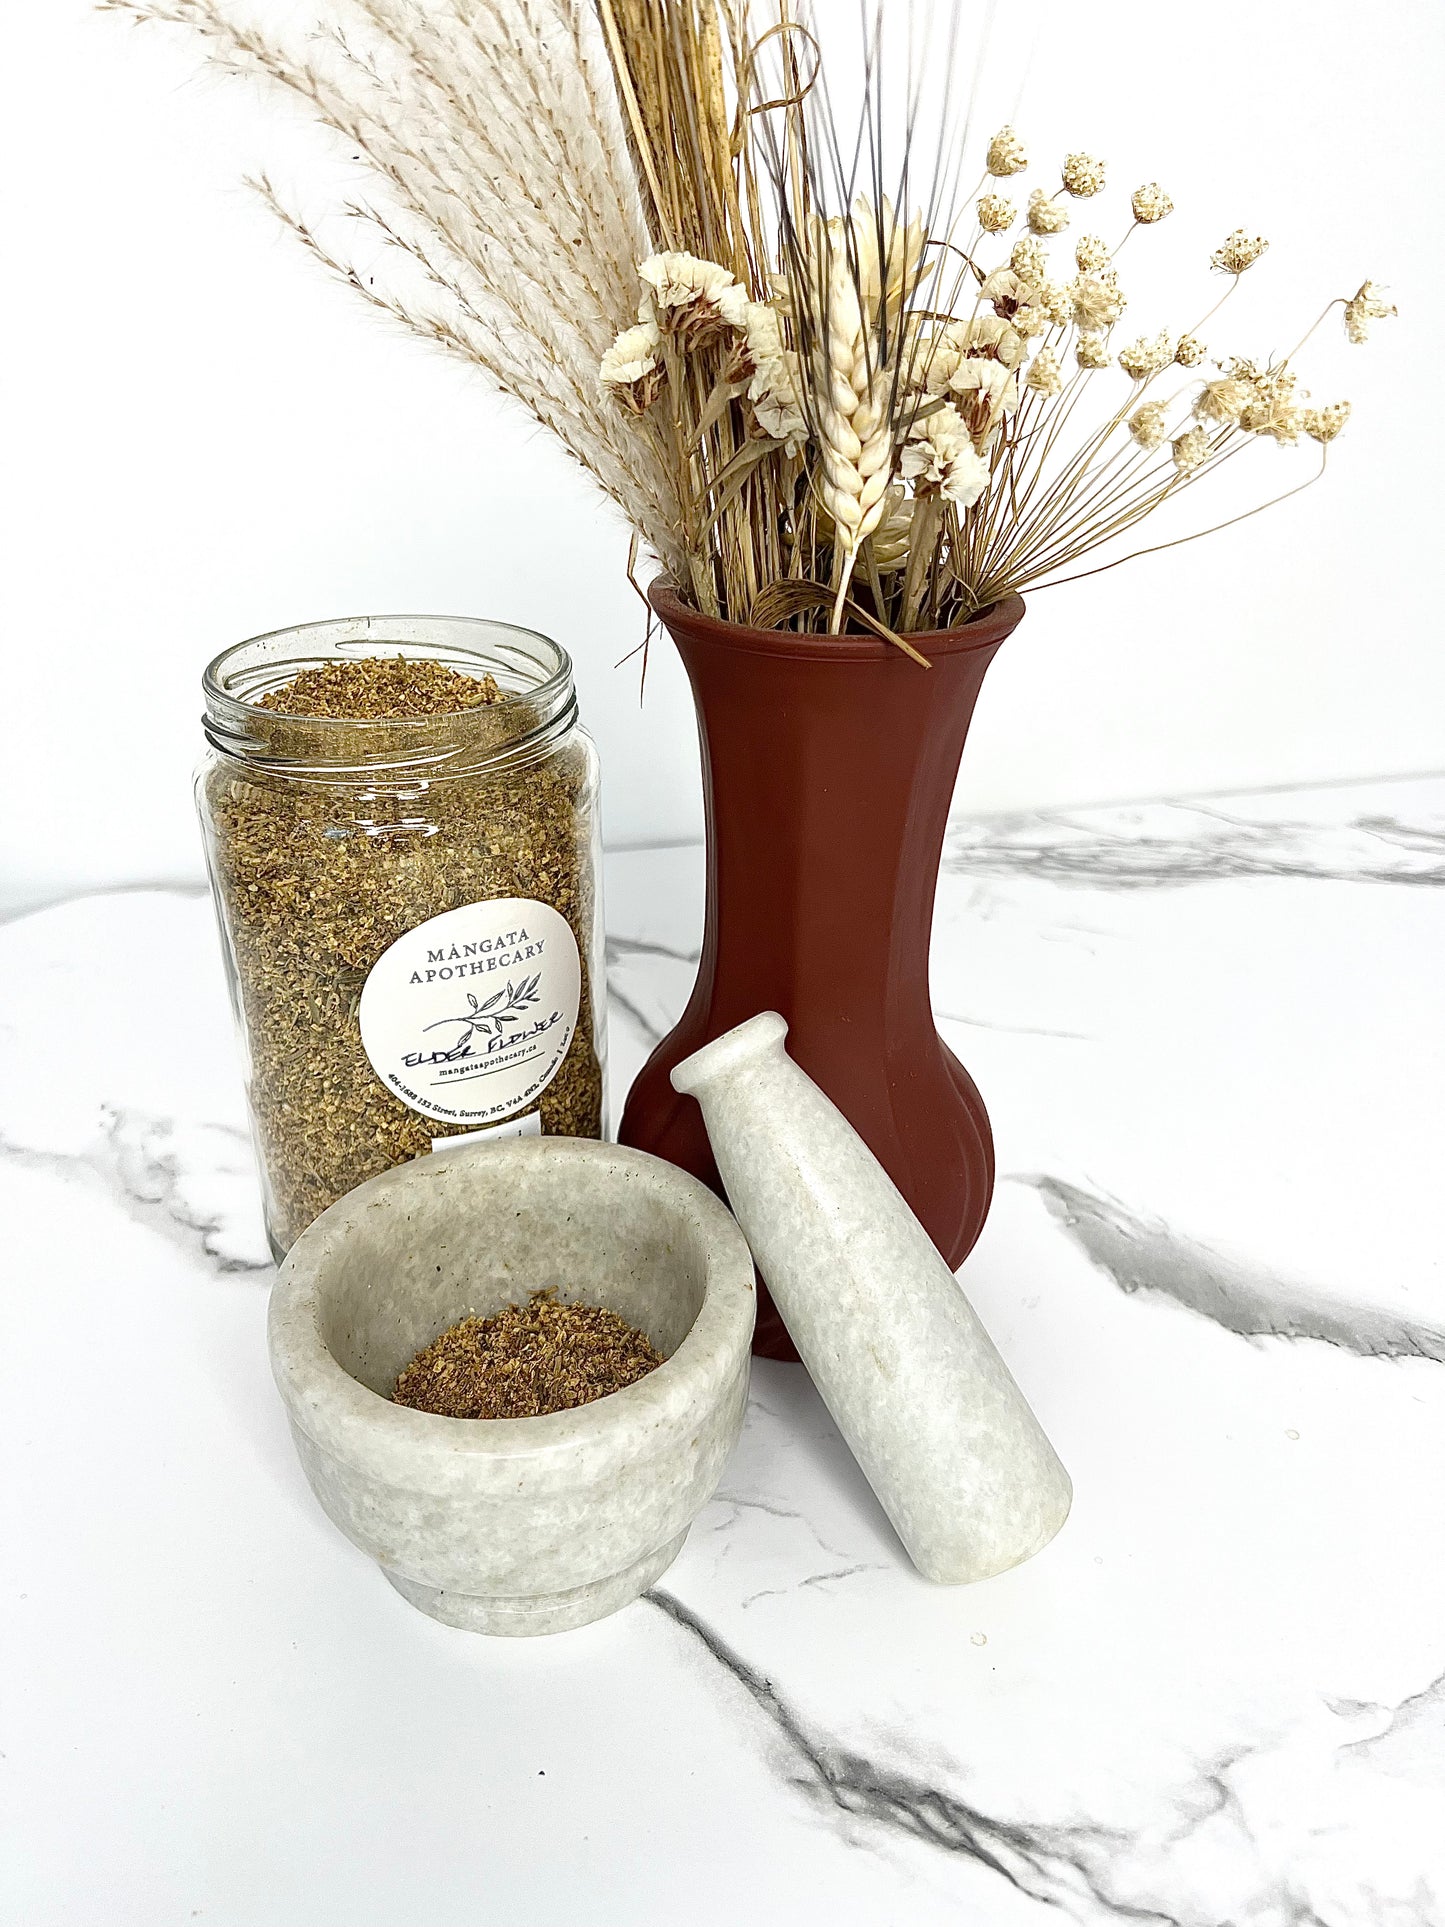 Elderflower Herb - Product Image For Mangata Dispensary